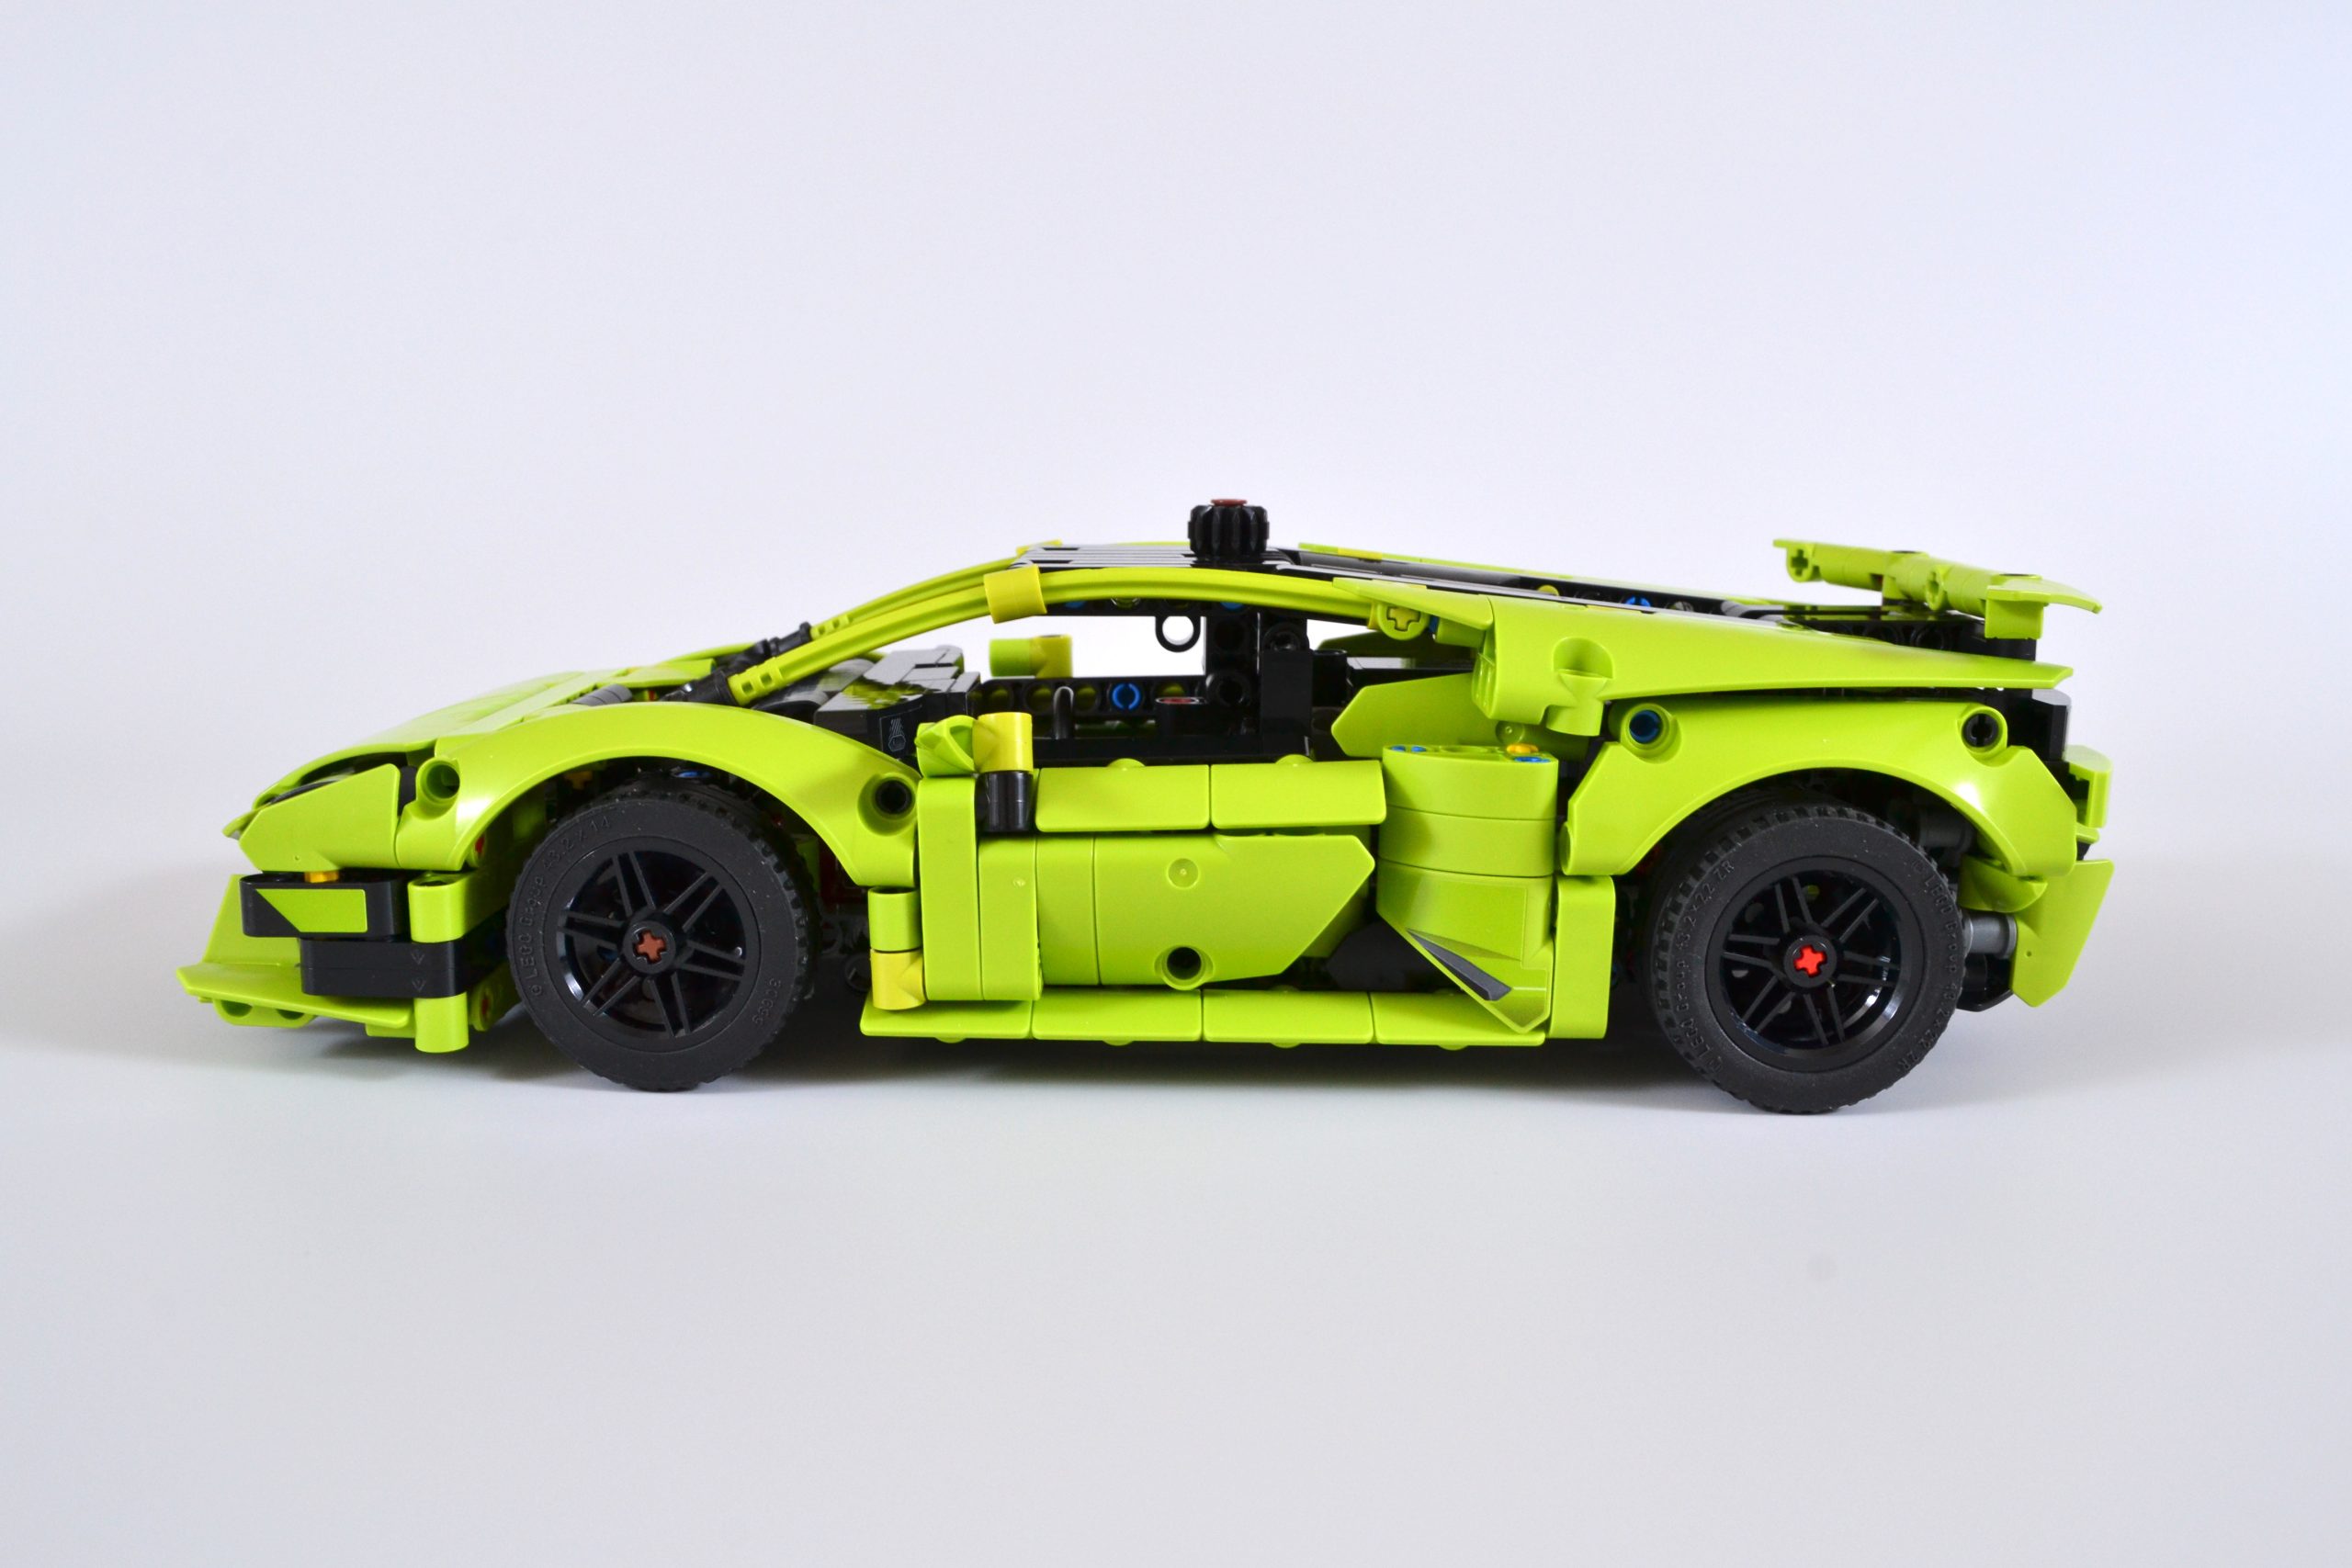 ▻ Review: LEGO Technic 42161 Lamborghini Huracán Tecnica - HOTH